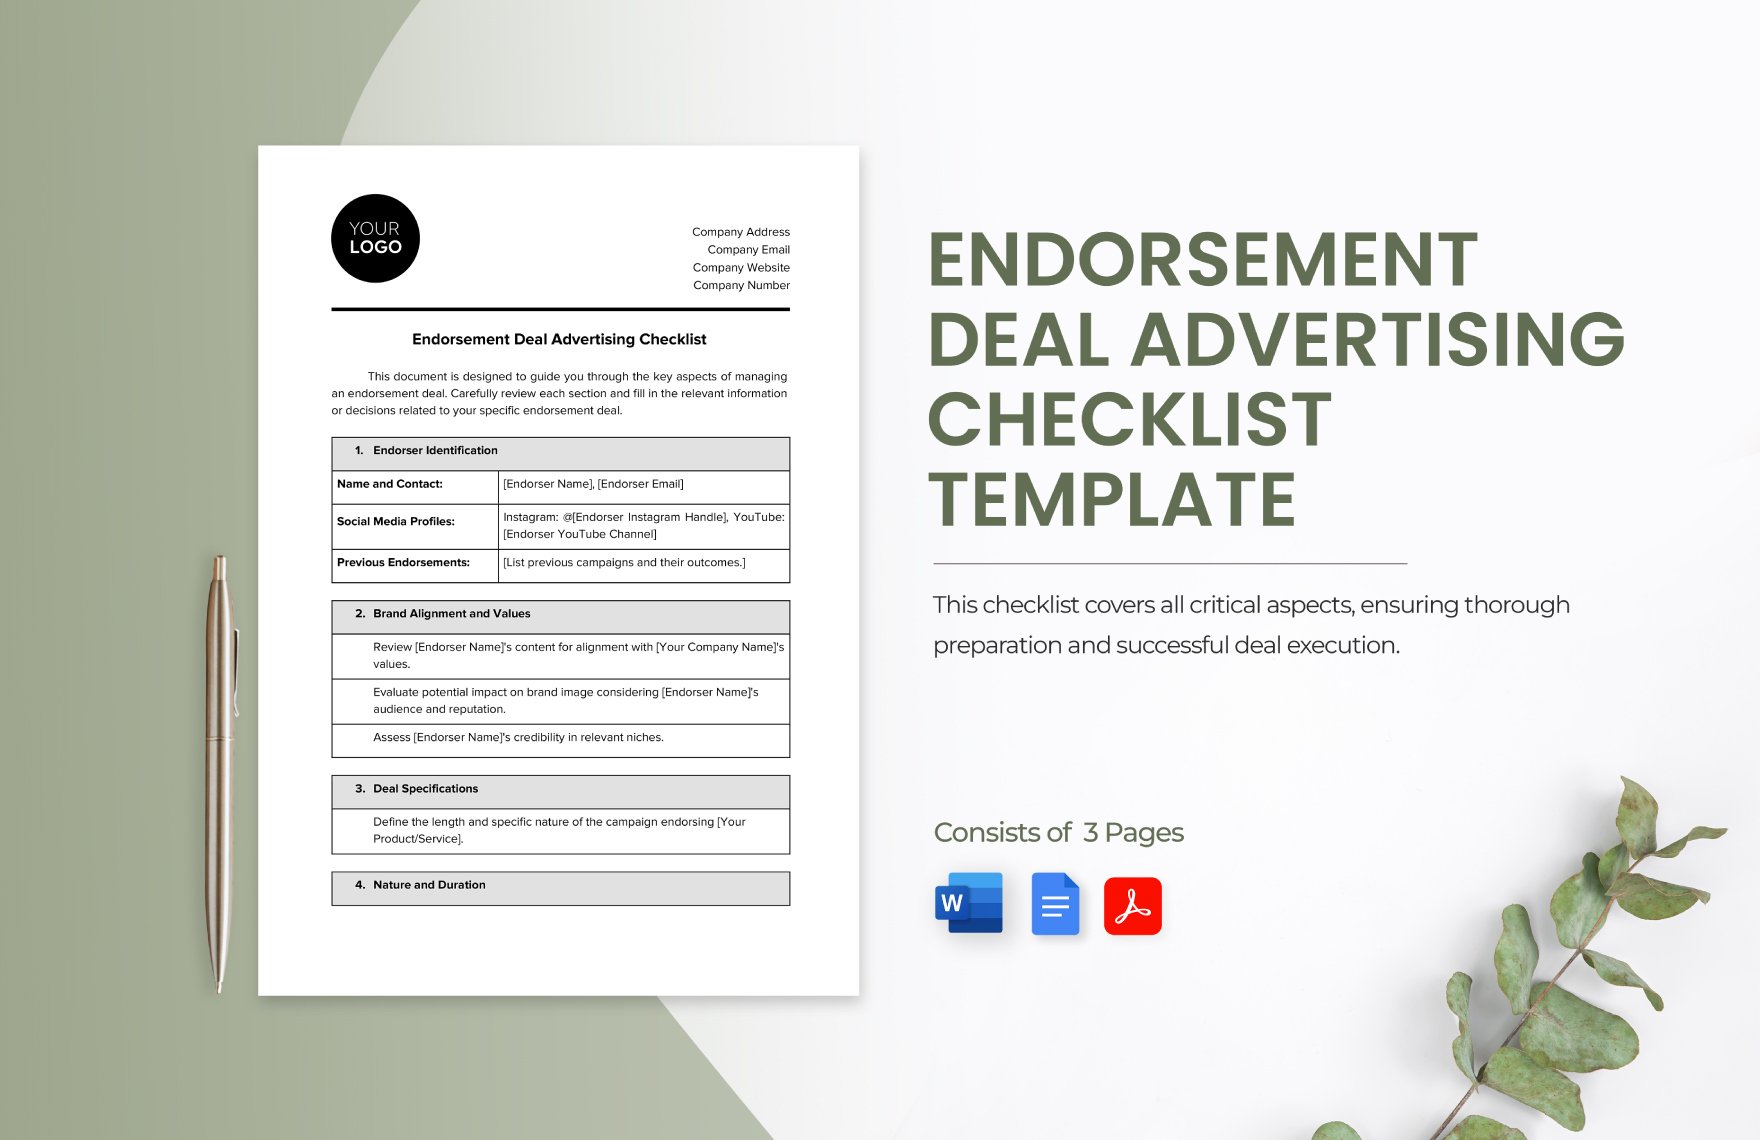 Endorsement Deal Advertising Checklist Template in Word, Google Docs, PDF